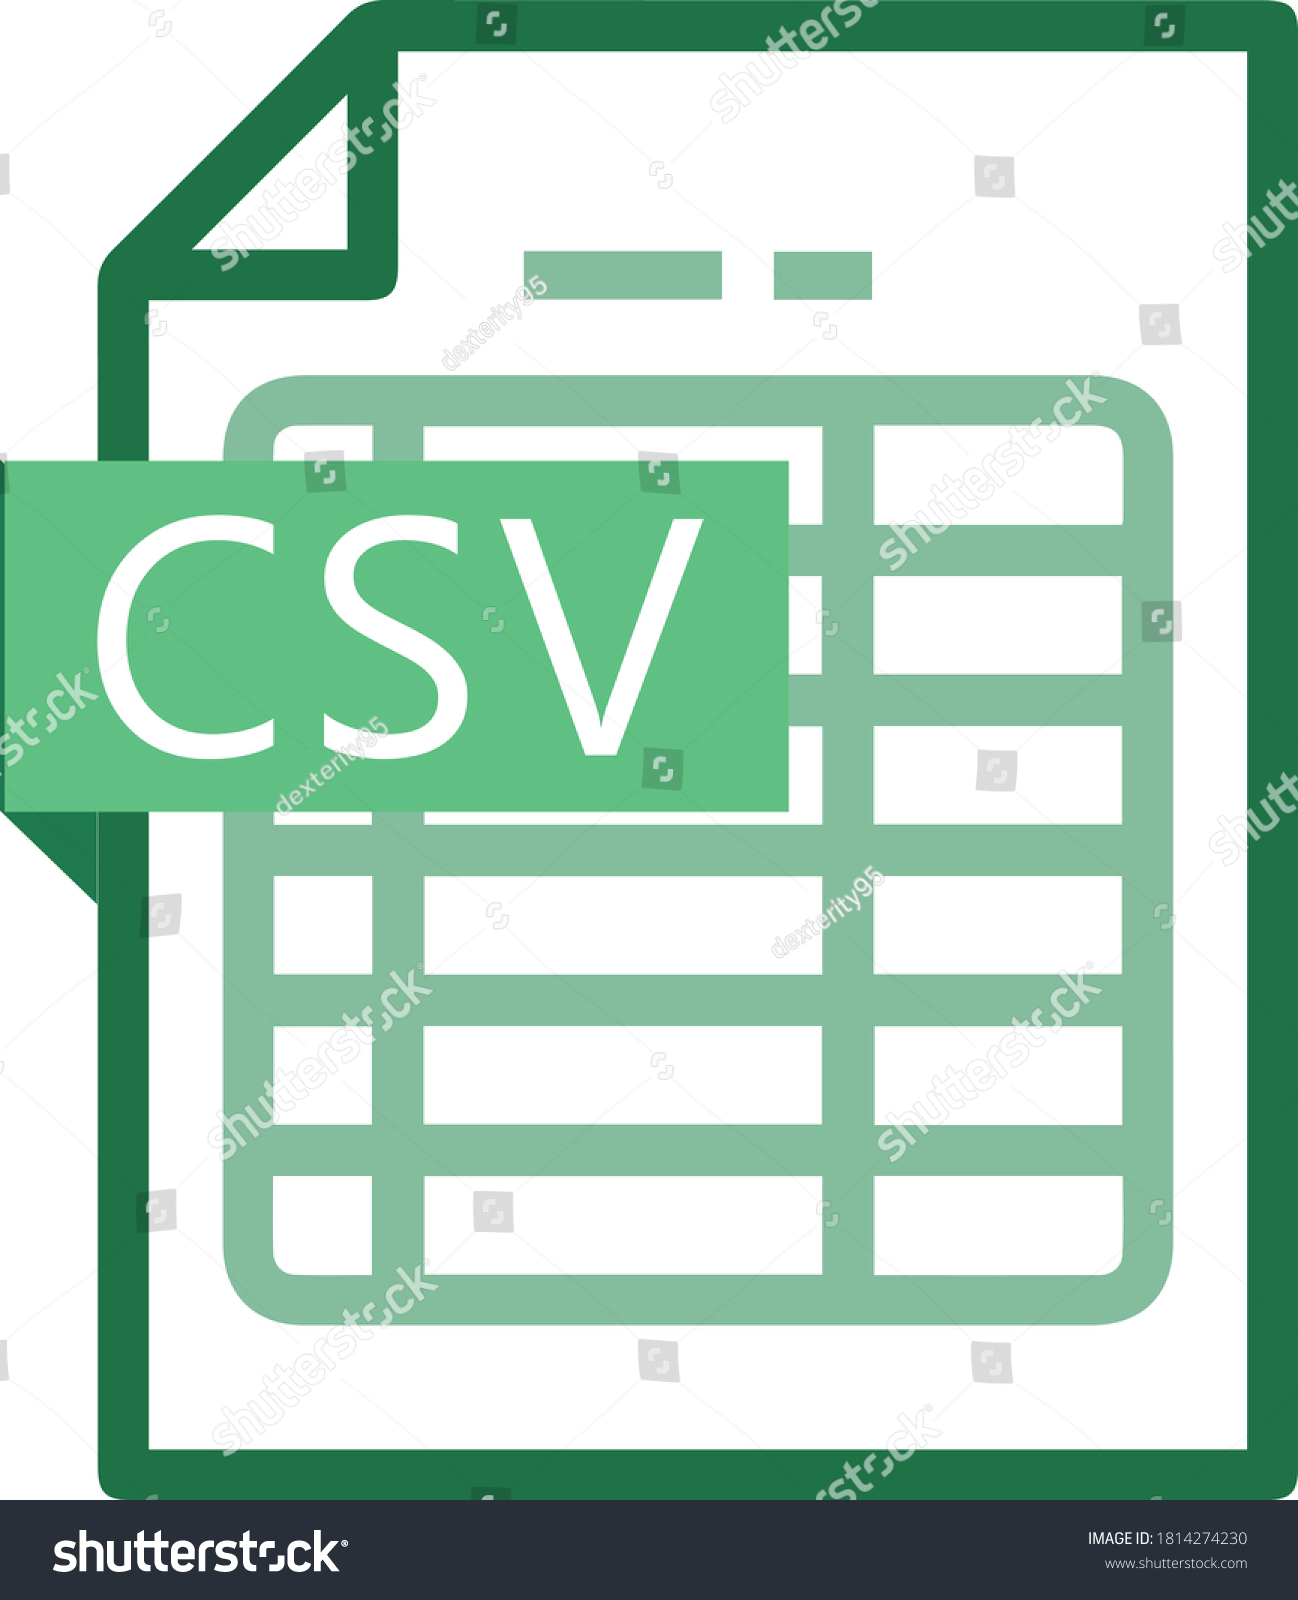 Csv Csvアイコンカンマ区切り値スプレッドシートスプレッドアイコンフラットコンセプトイラストexcel ワークブックワークシート緑のデータベースレコードテーブルデータの計算 のベクター画像素材 ロイヤリティフリー